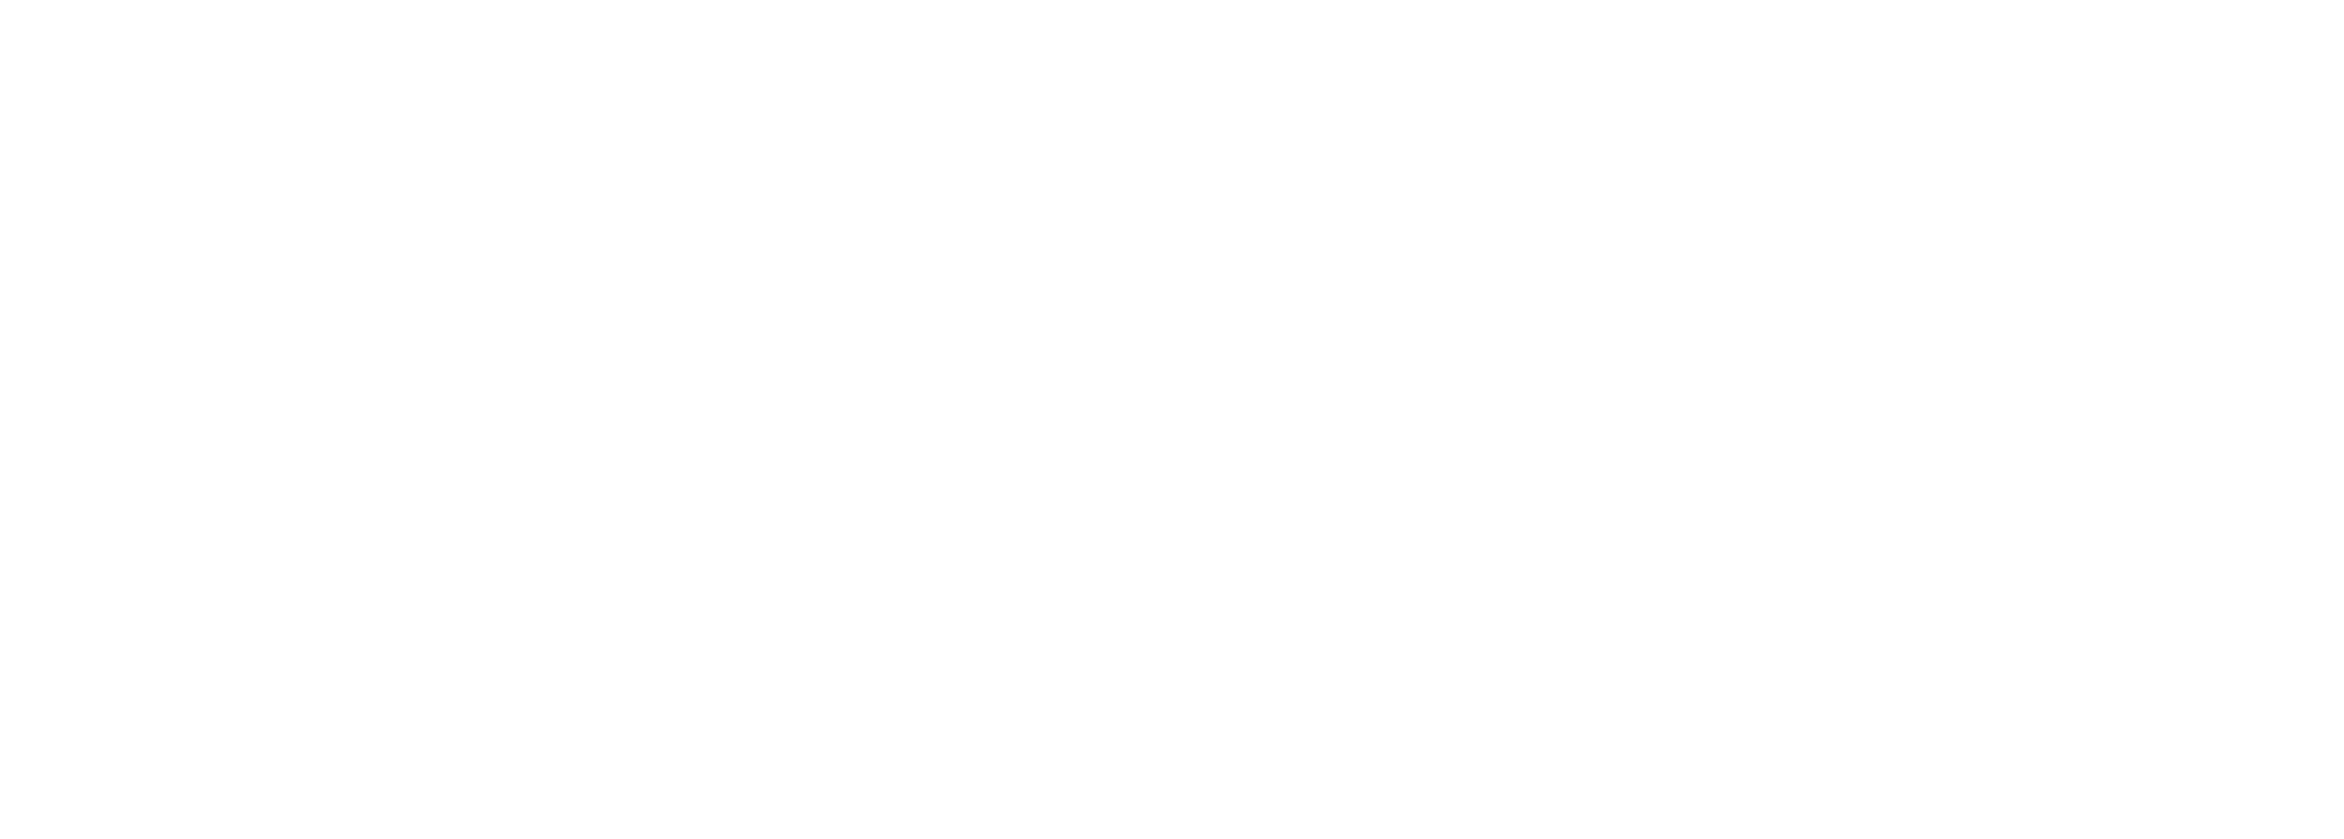 Bentworth Logo